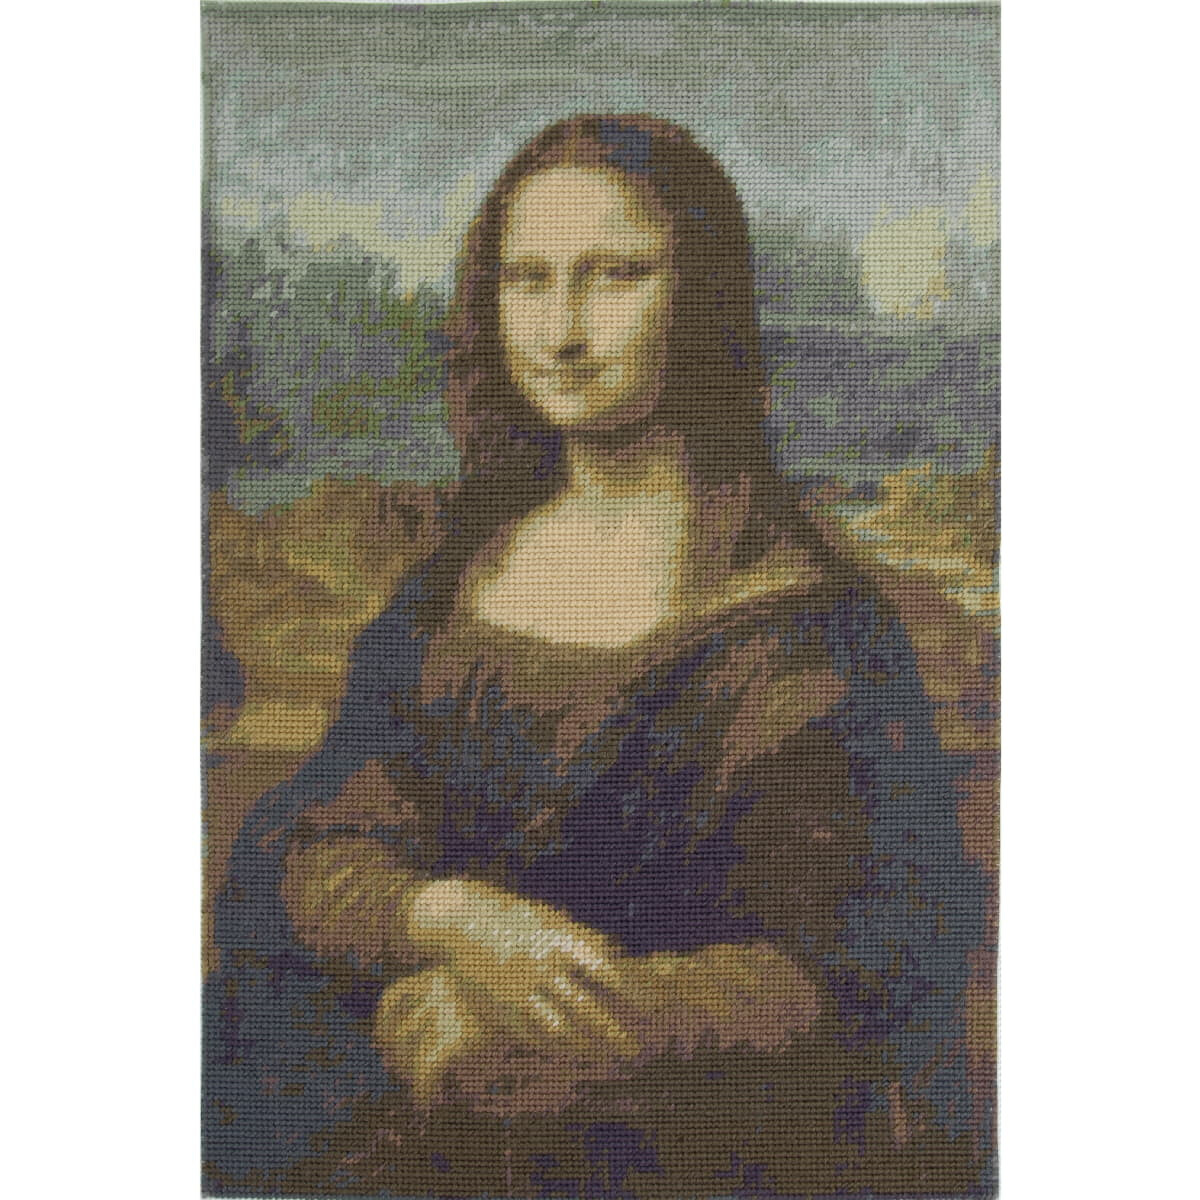 DMC wandtapijtborduurset "Louvre Mona Lisa",...